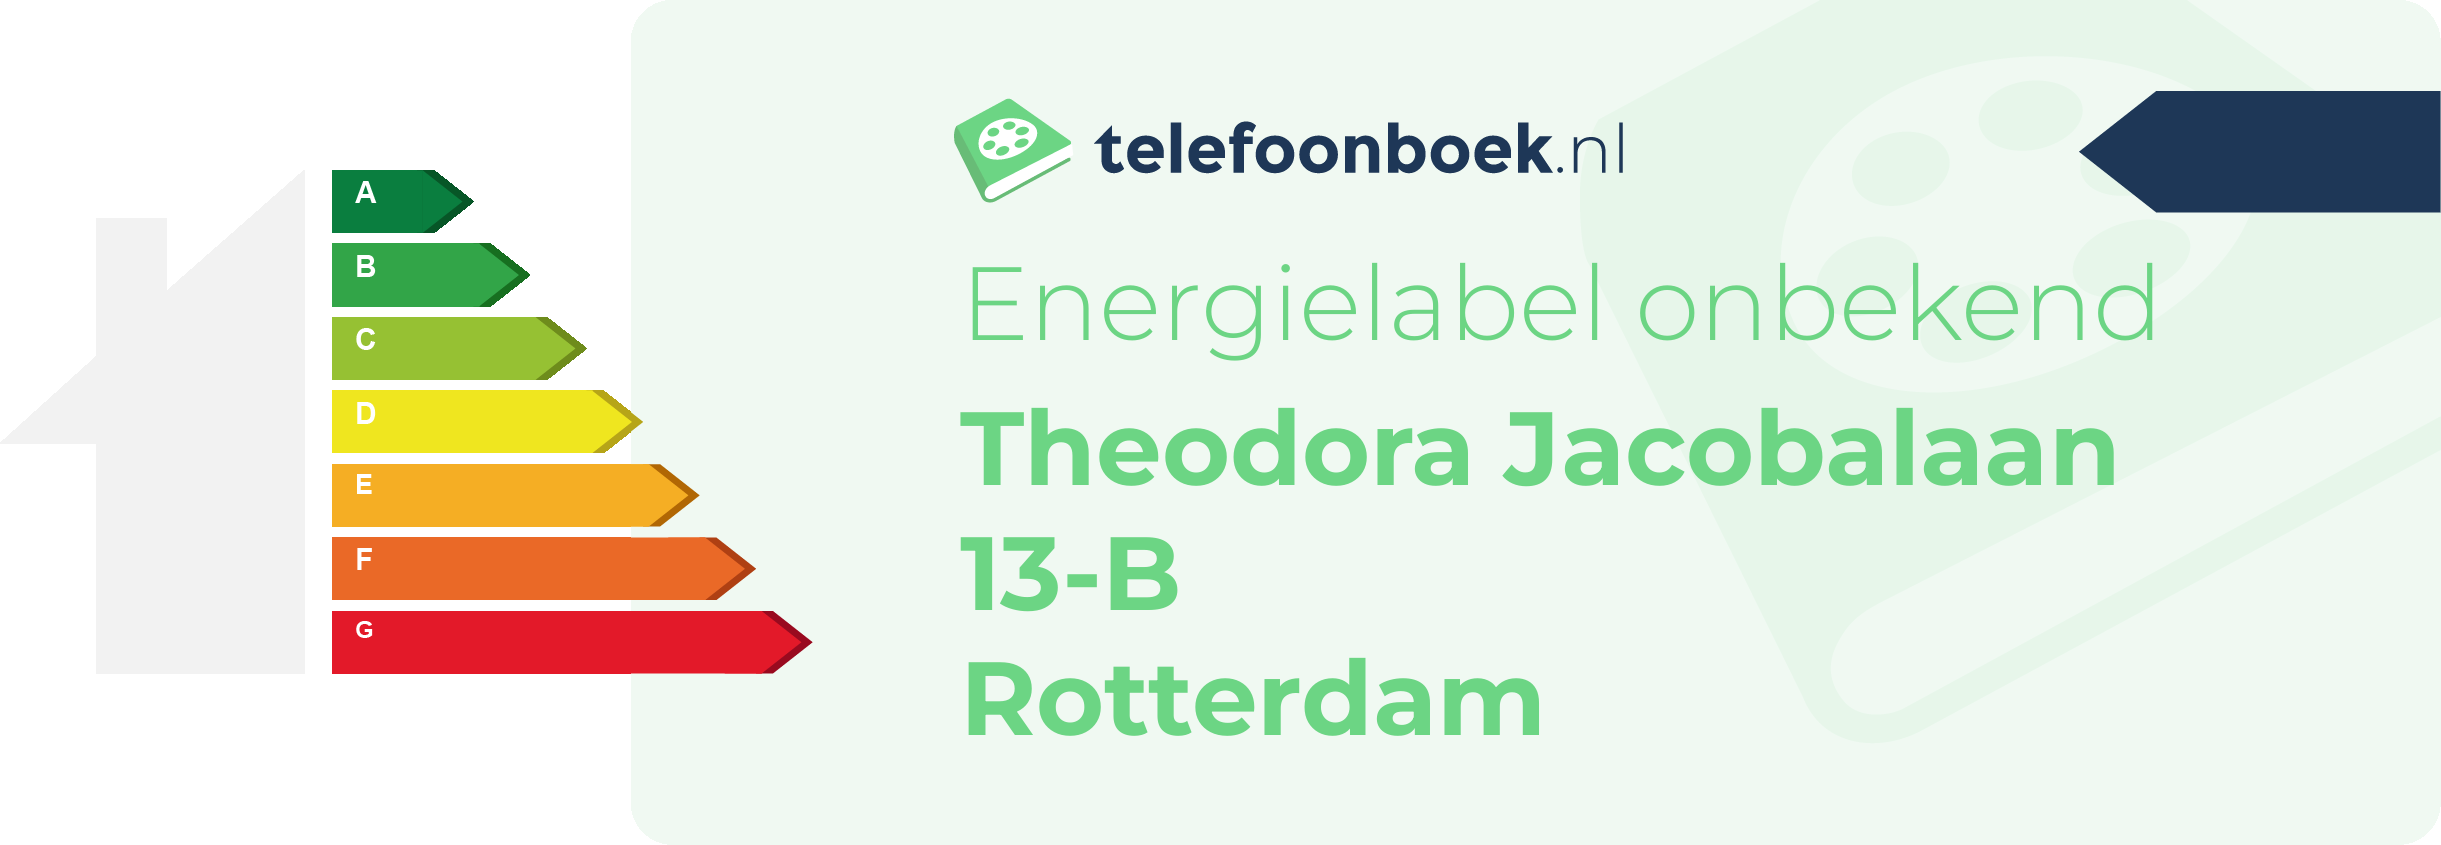 Energielabel Theodora Jacobalaan 13-B Rotterdam